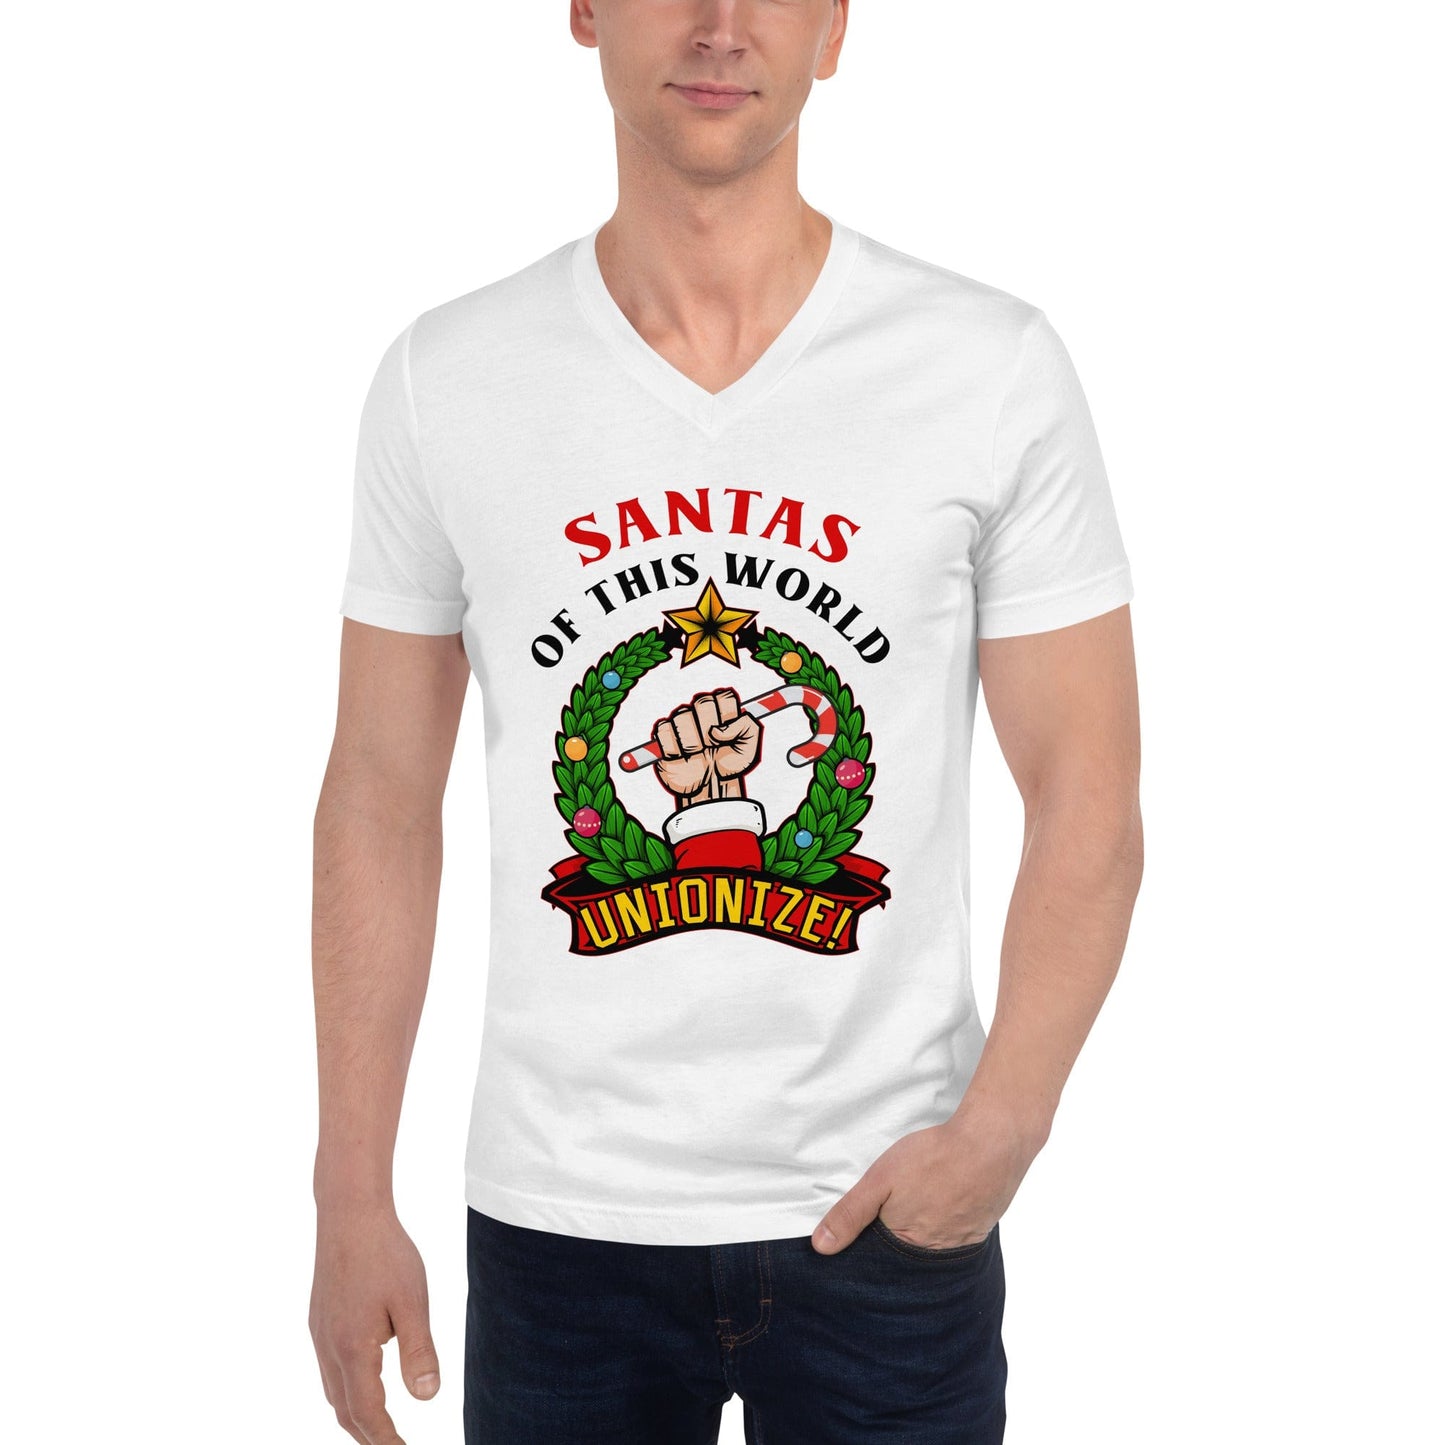 Santas of this world, Unionize! - Unisex V-Neck T-Shirt